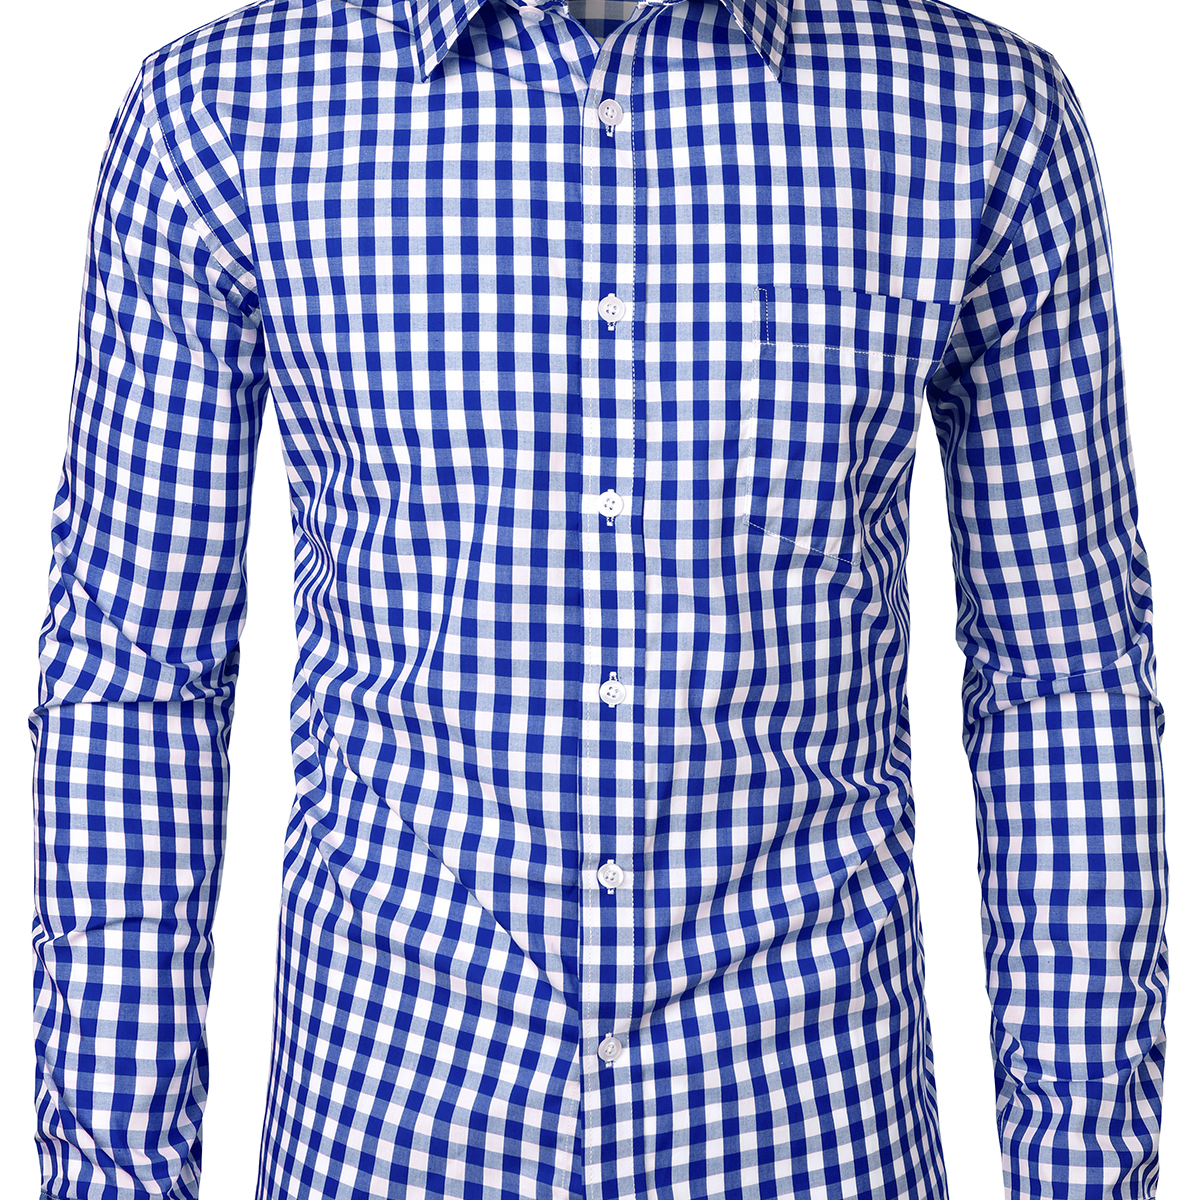 Men's Cotton Long Sleeve Plaid Casual Shirt